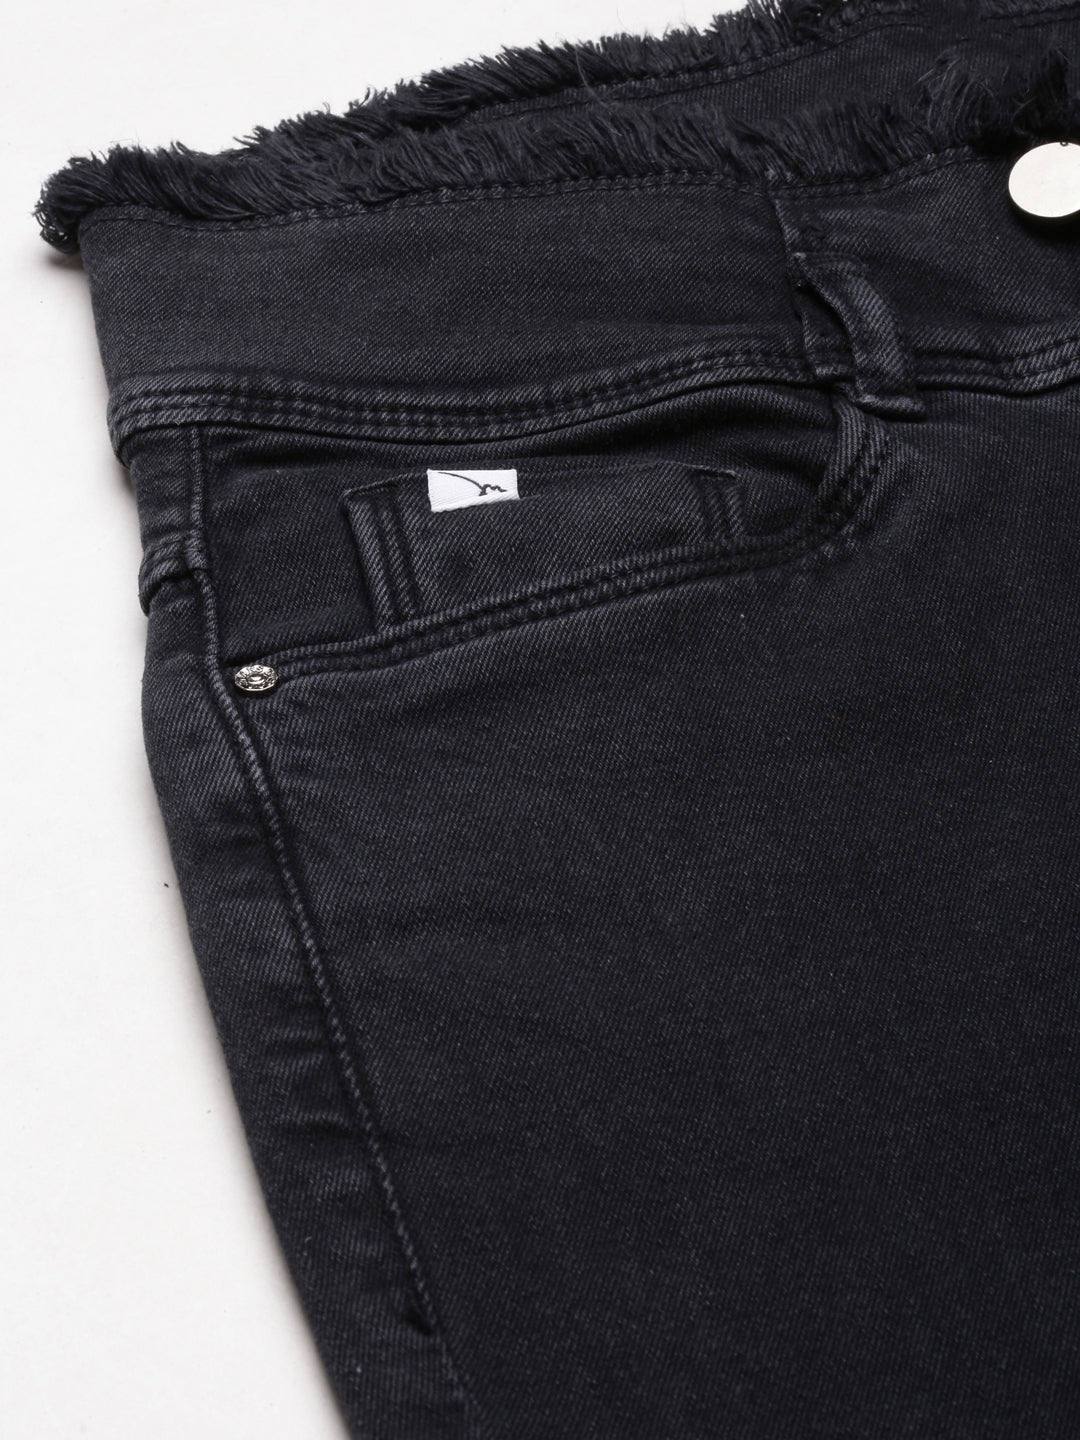 Women Black Solid Straight Fit Denim Jeans